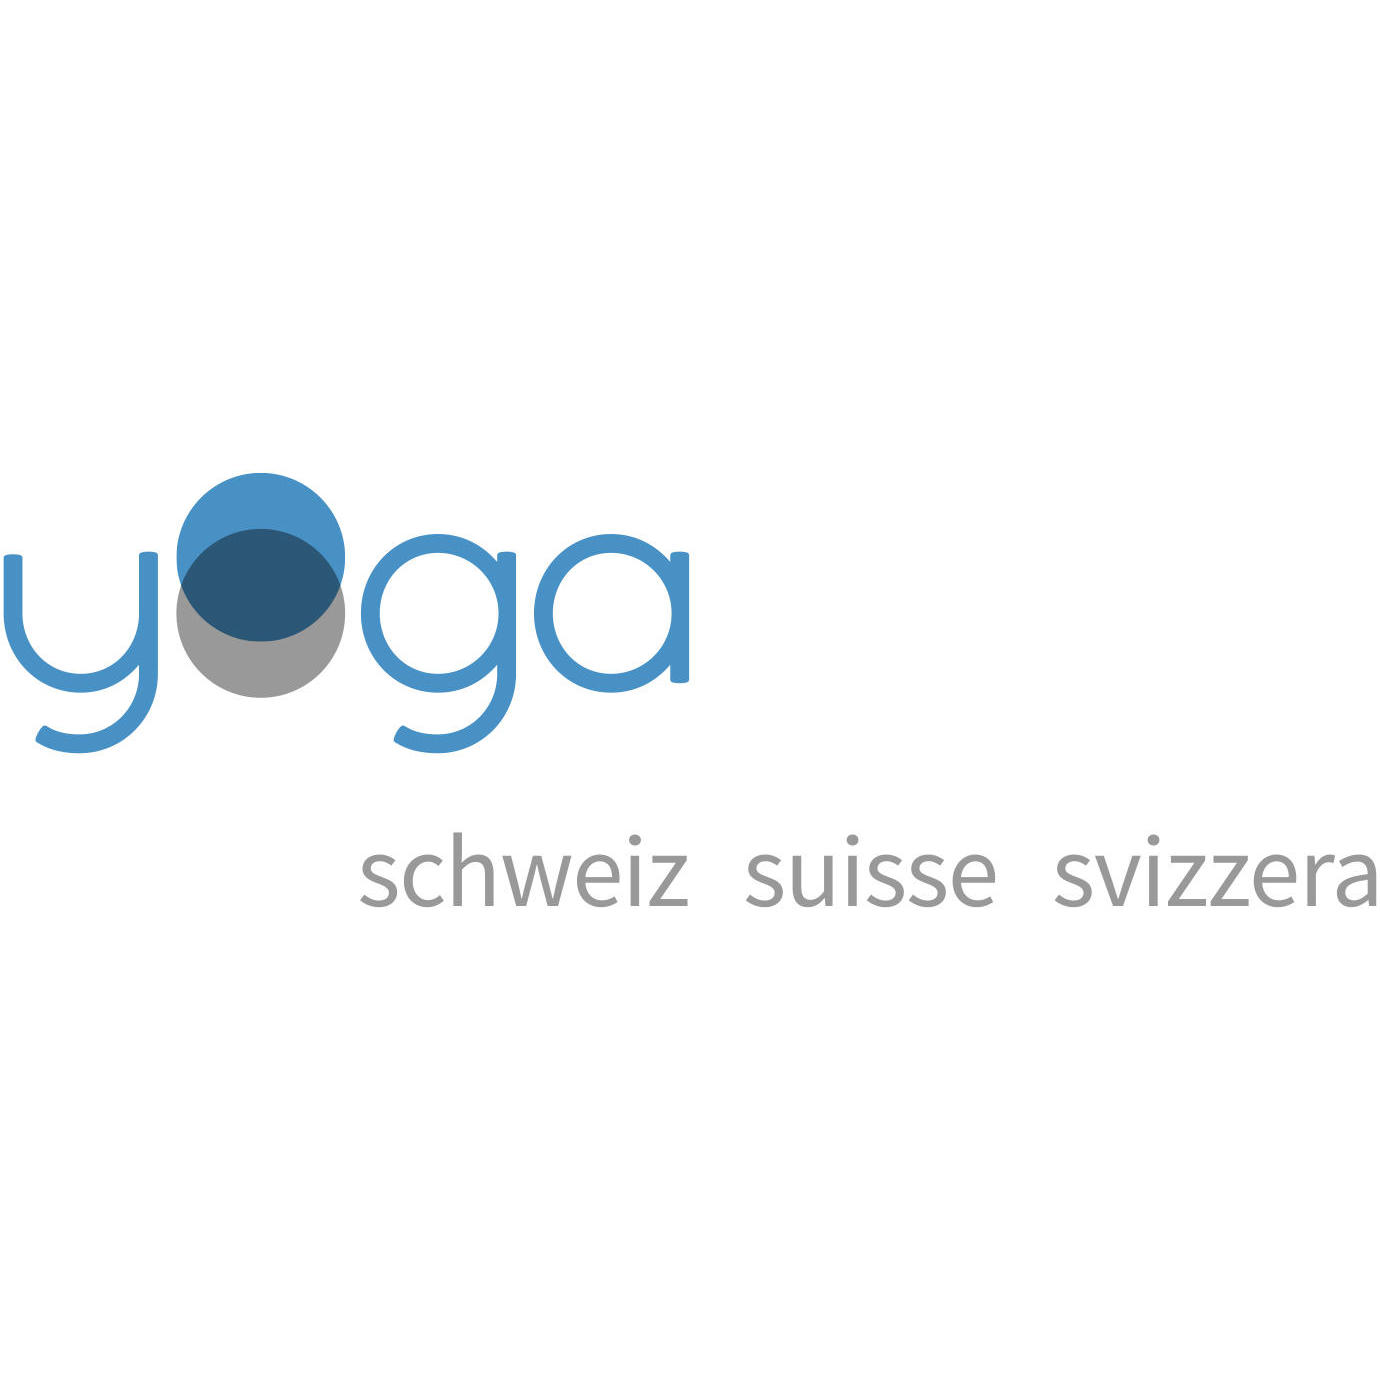 Verband Yoga Schweiz Suisse Svizzera Logo